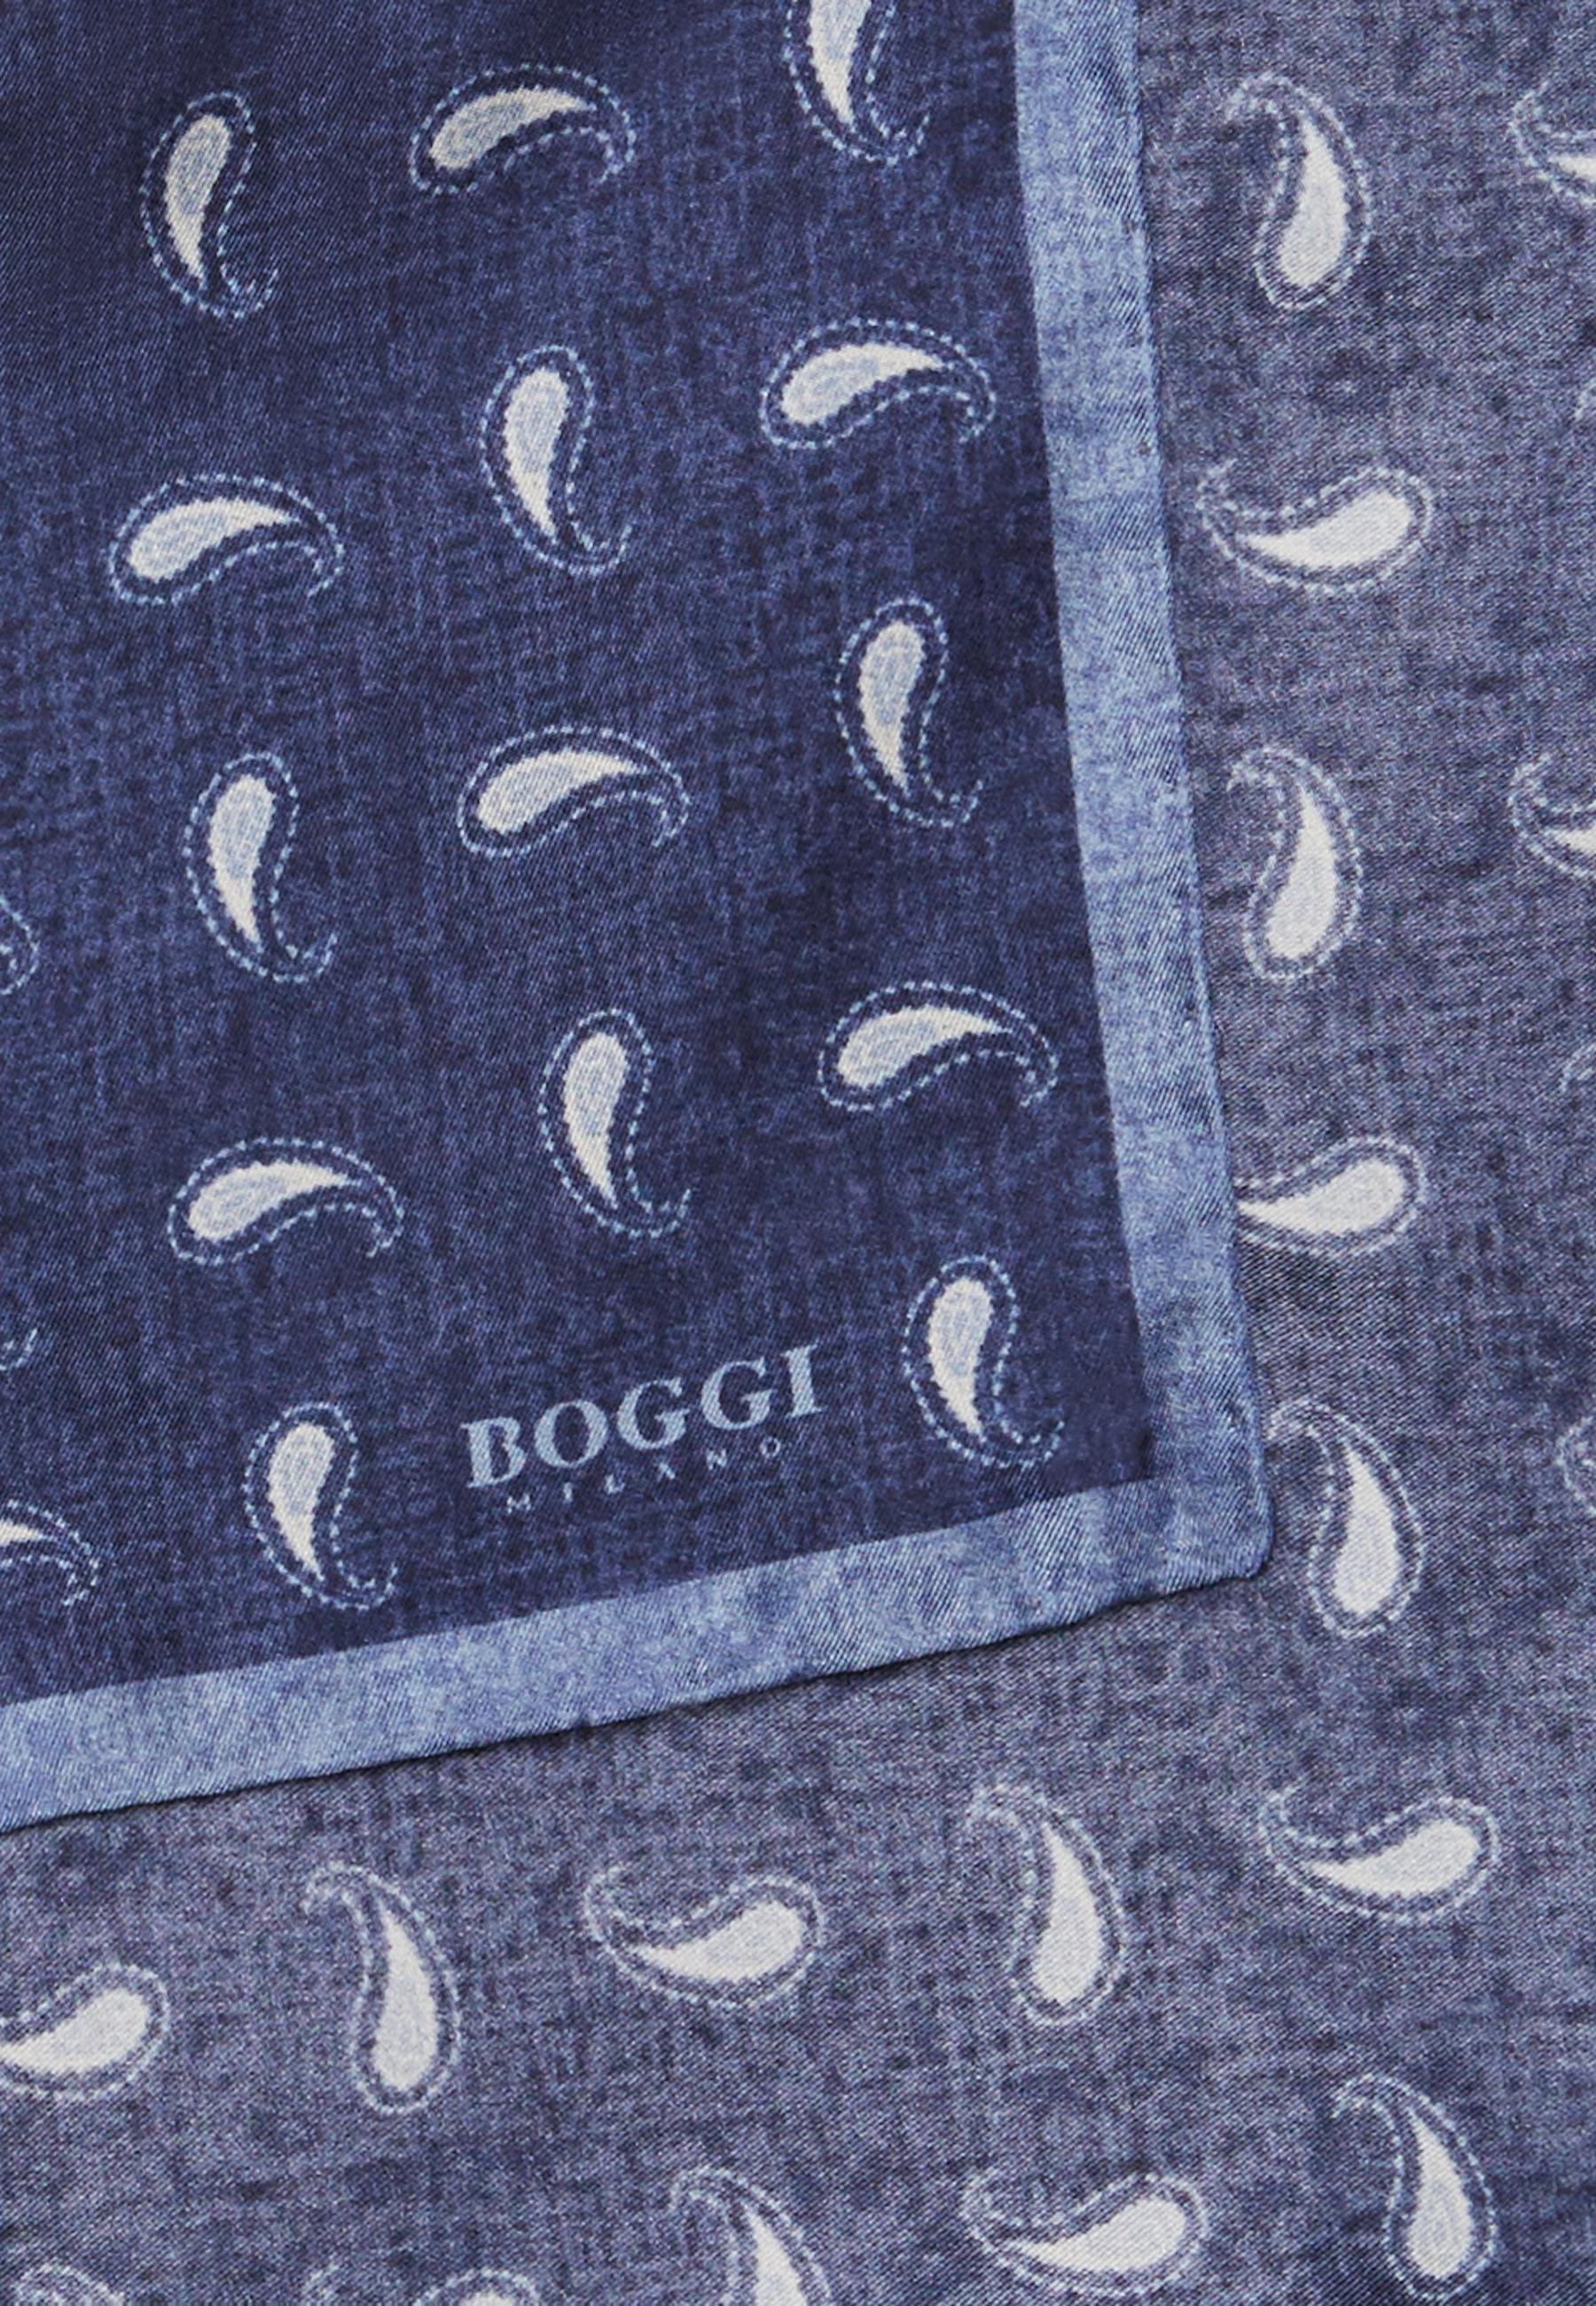 Boggi Milano - Navy Micro Patterned Silk Pocket Square